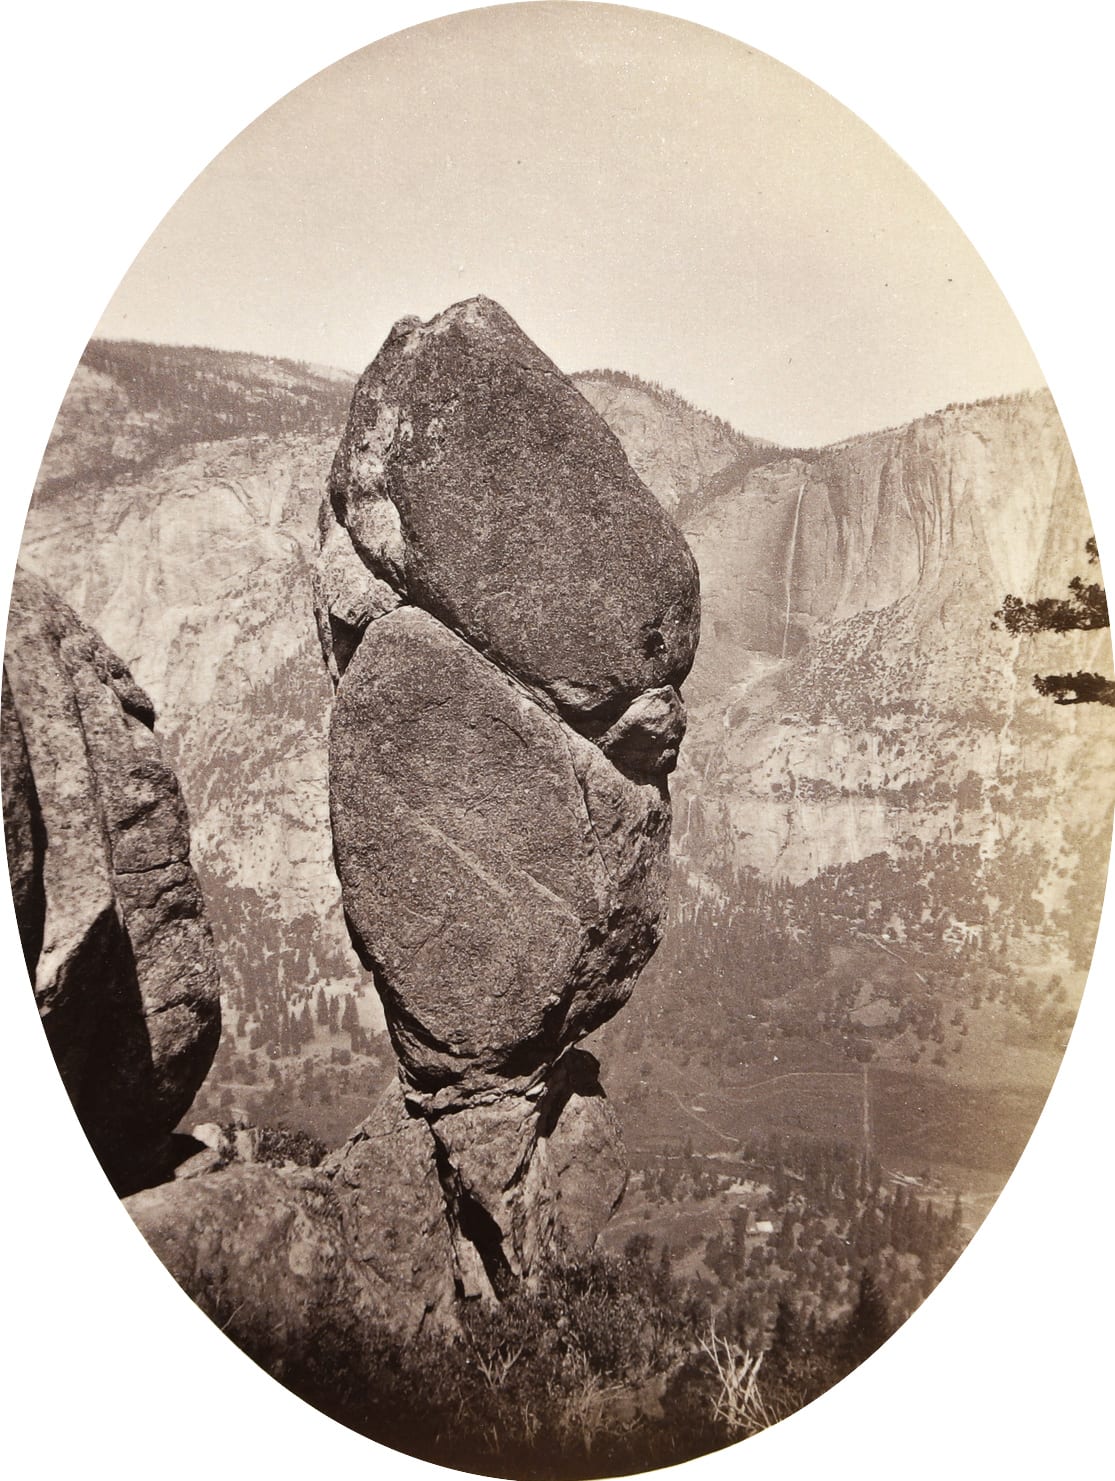 Carleton Watkins, Agassiz Rock from Union Pt, Yosemite, 1878-81 